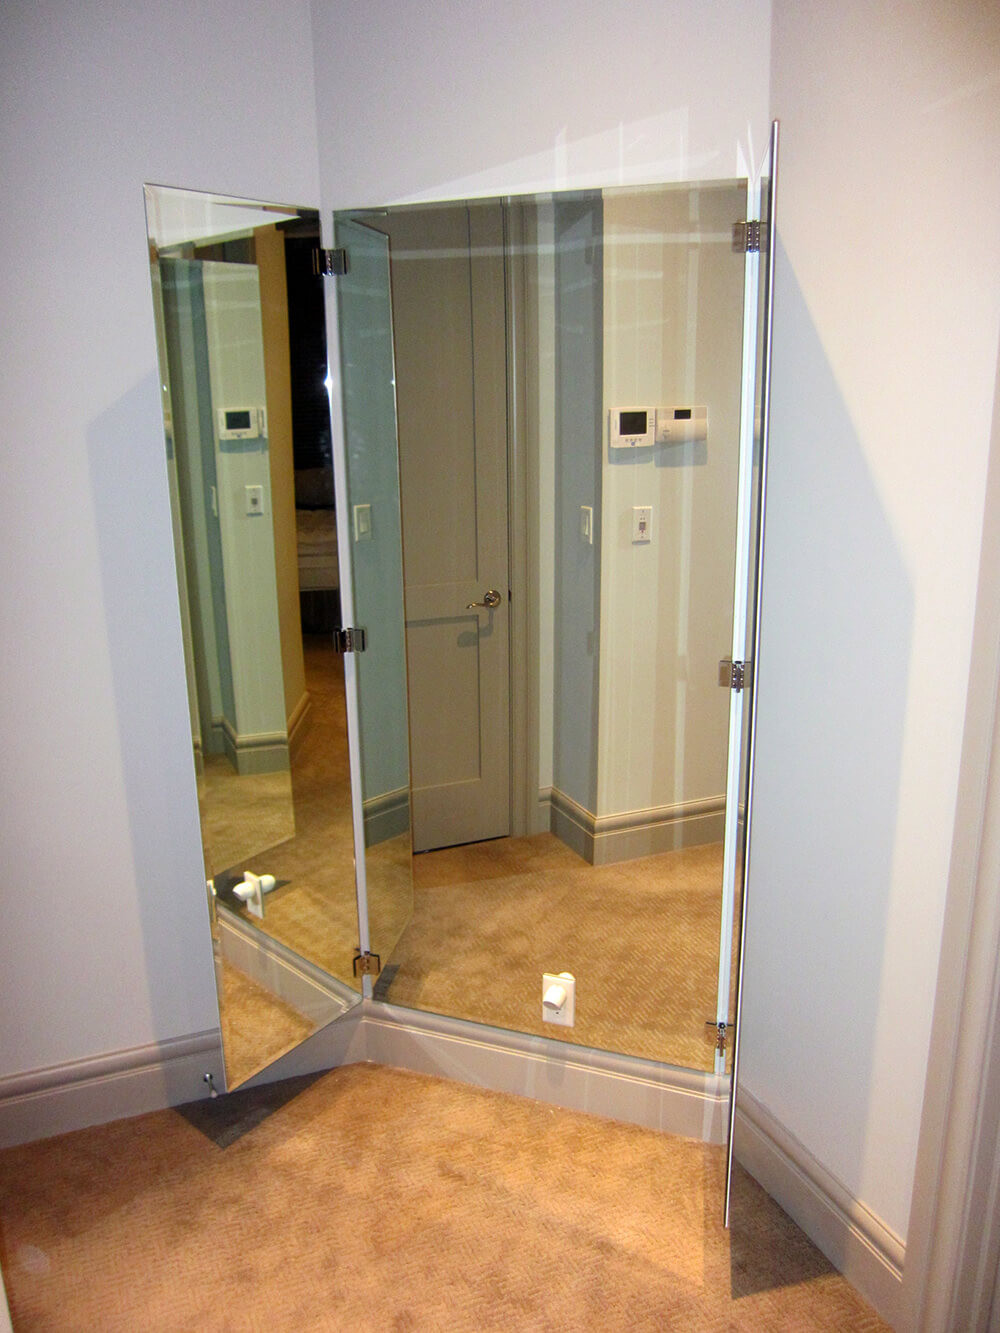 3 Way Bathroom Mirror
 Mirrors House of Mirrors & Glass